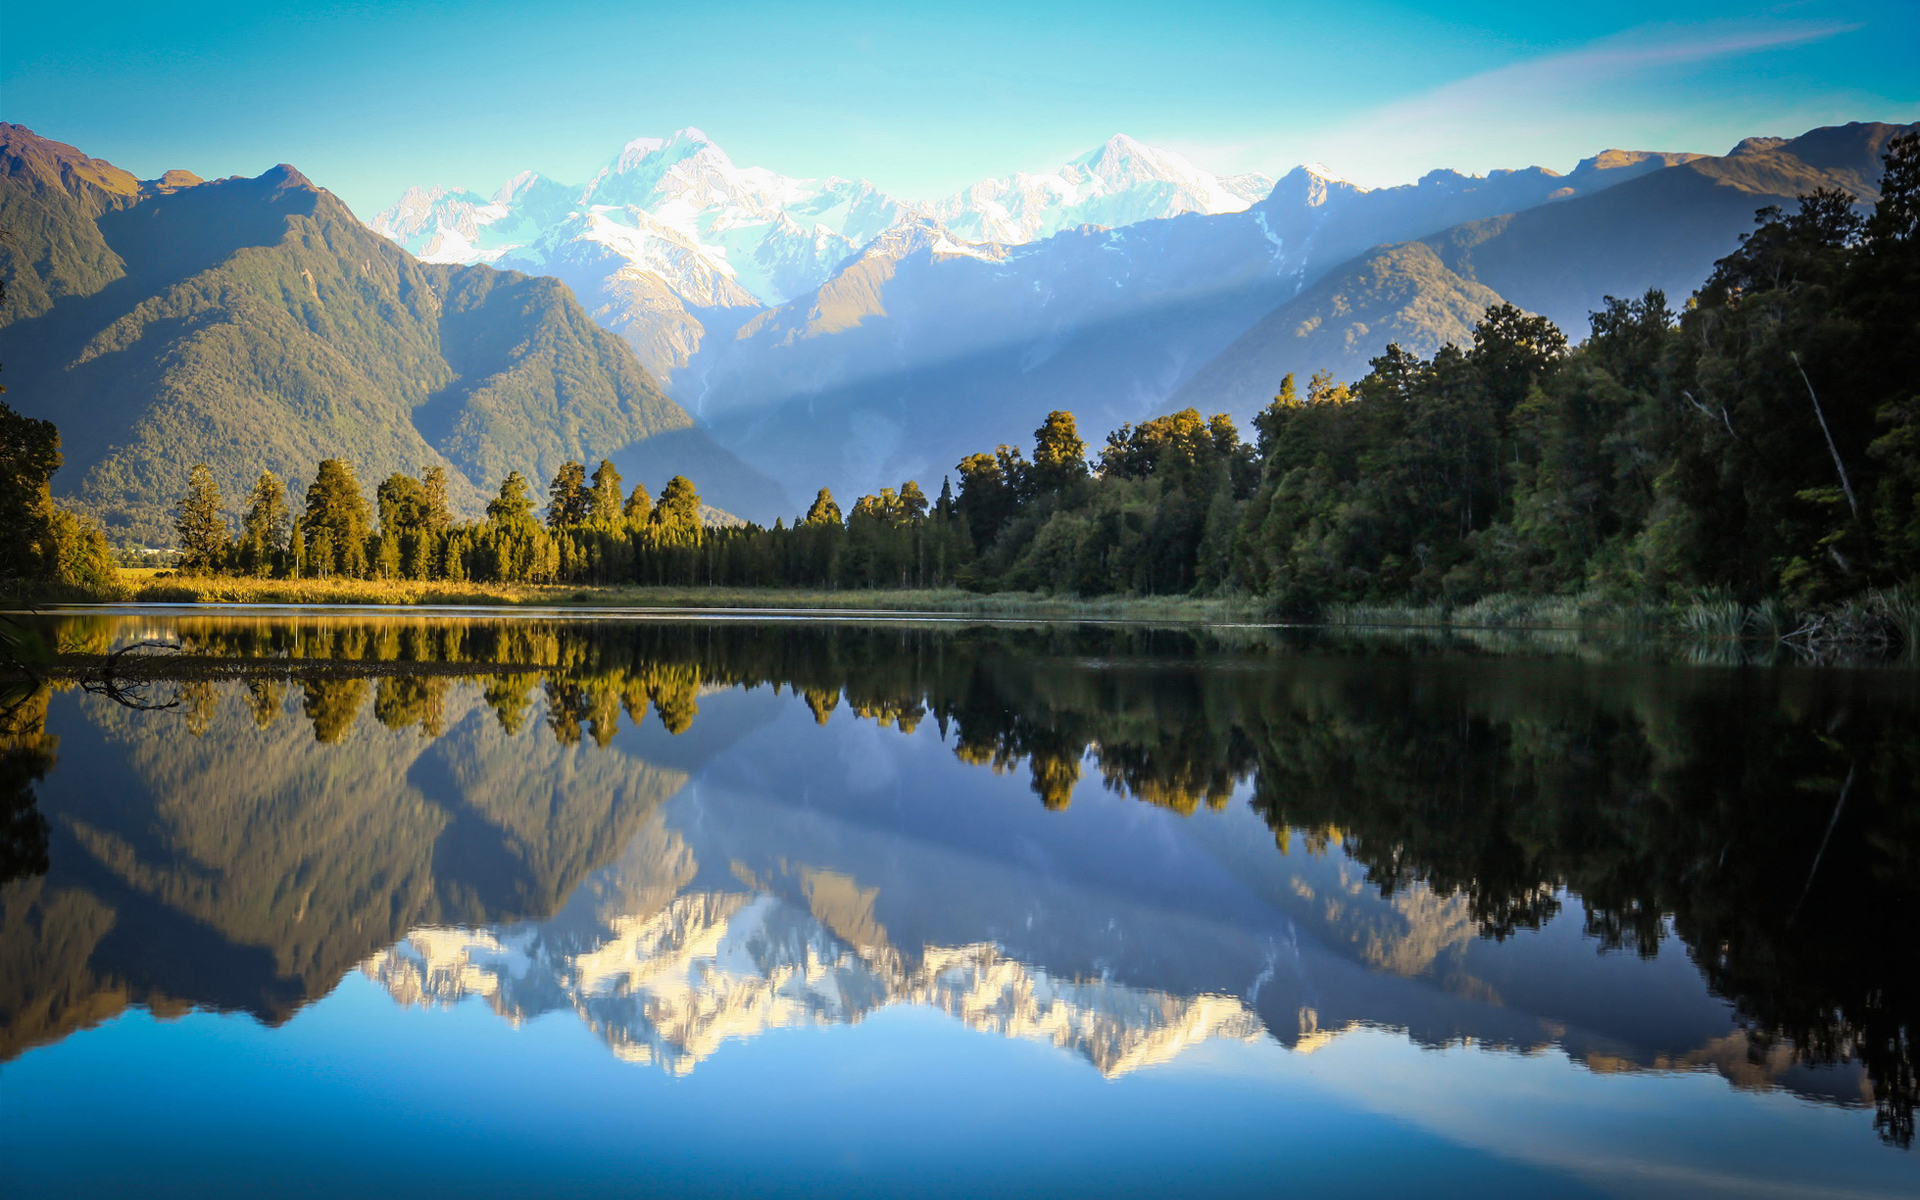 16 New Zealand Lake Matheson Reflections HD Wallpapers 761 New